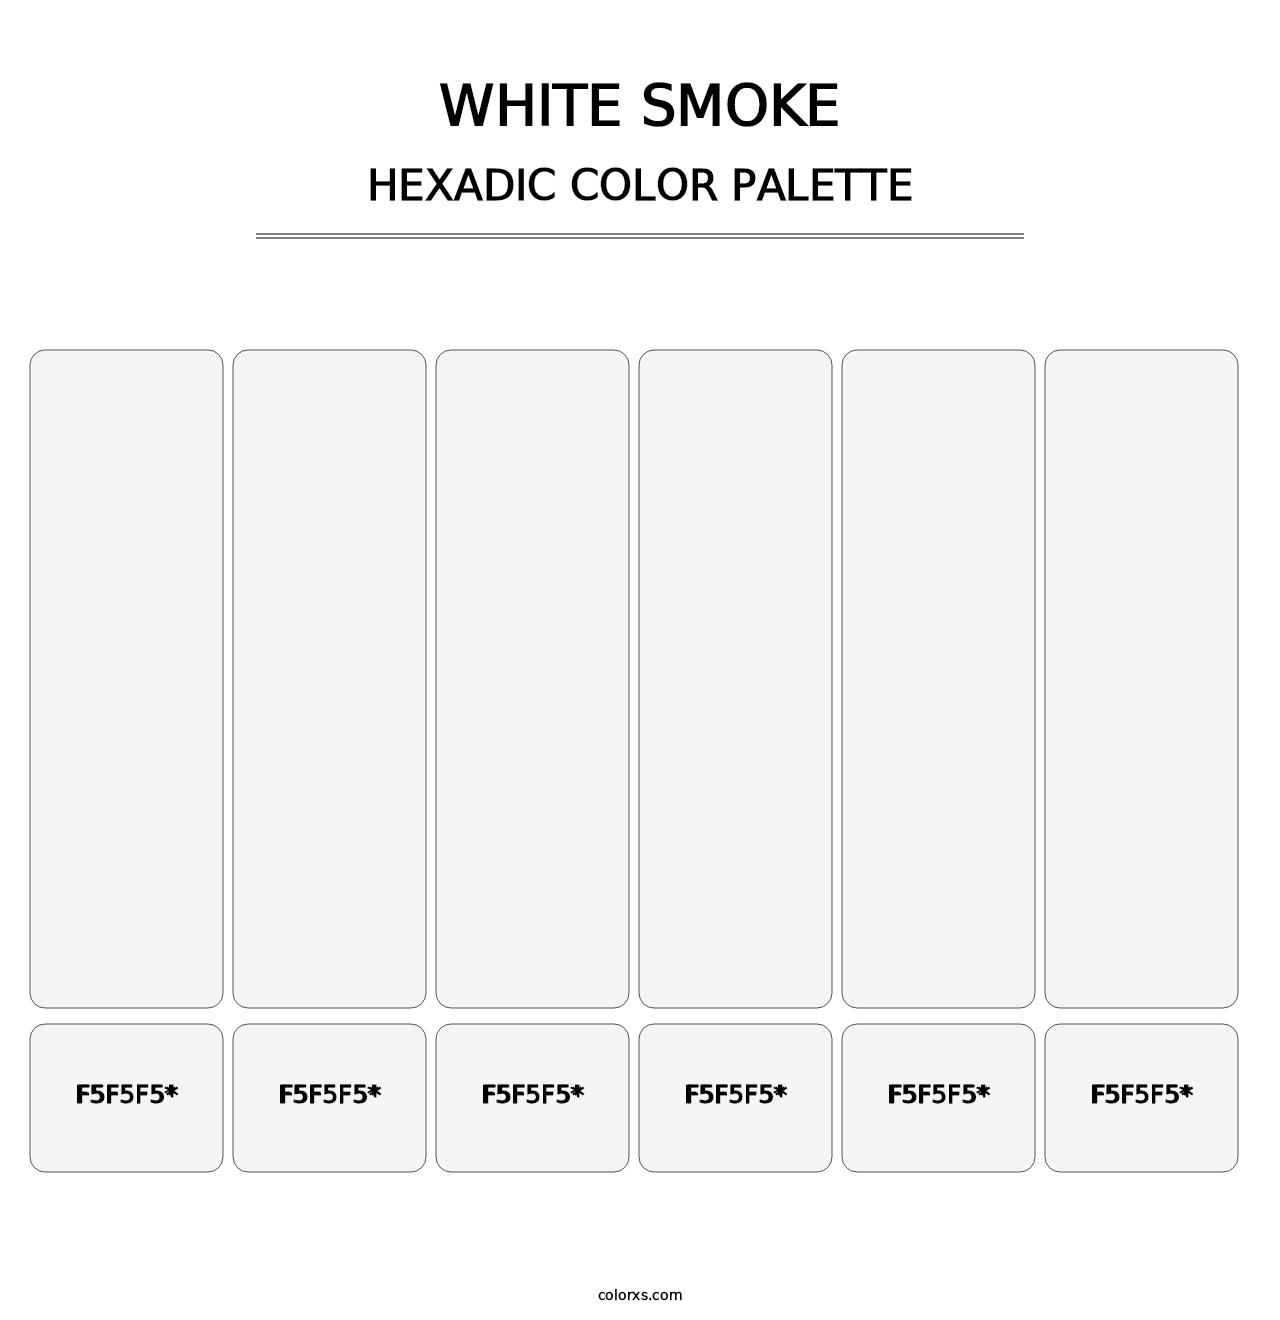 White Smoke - Hexadic Color Palette